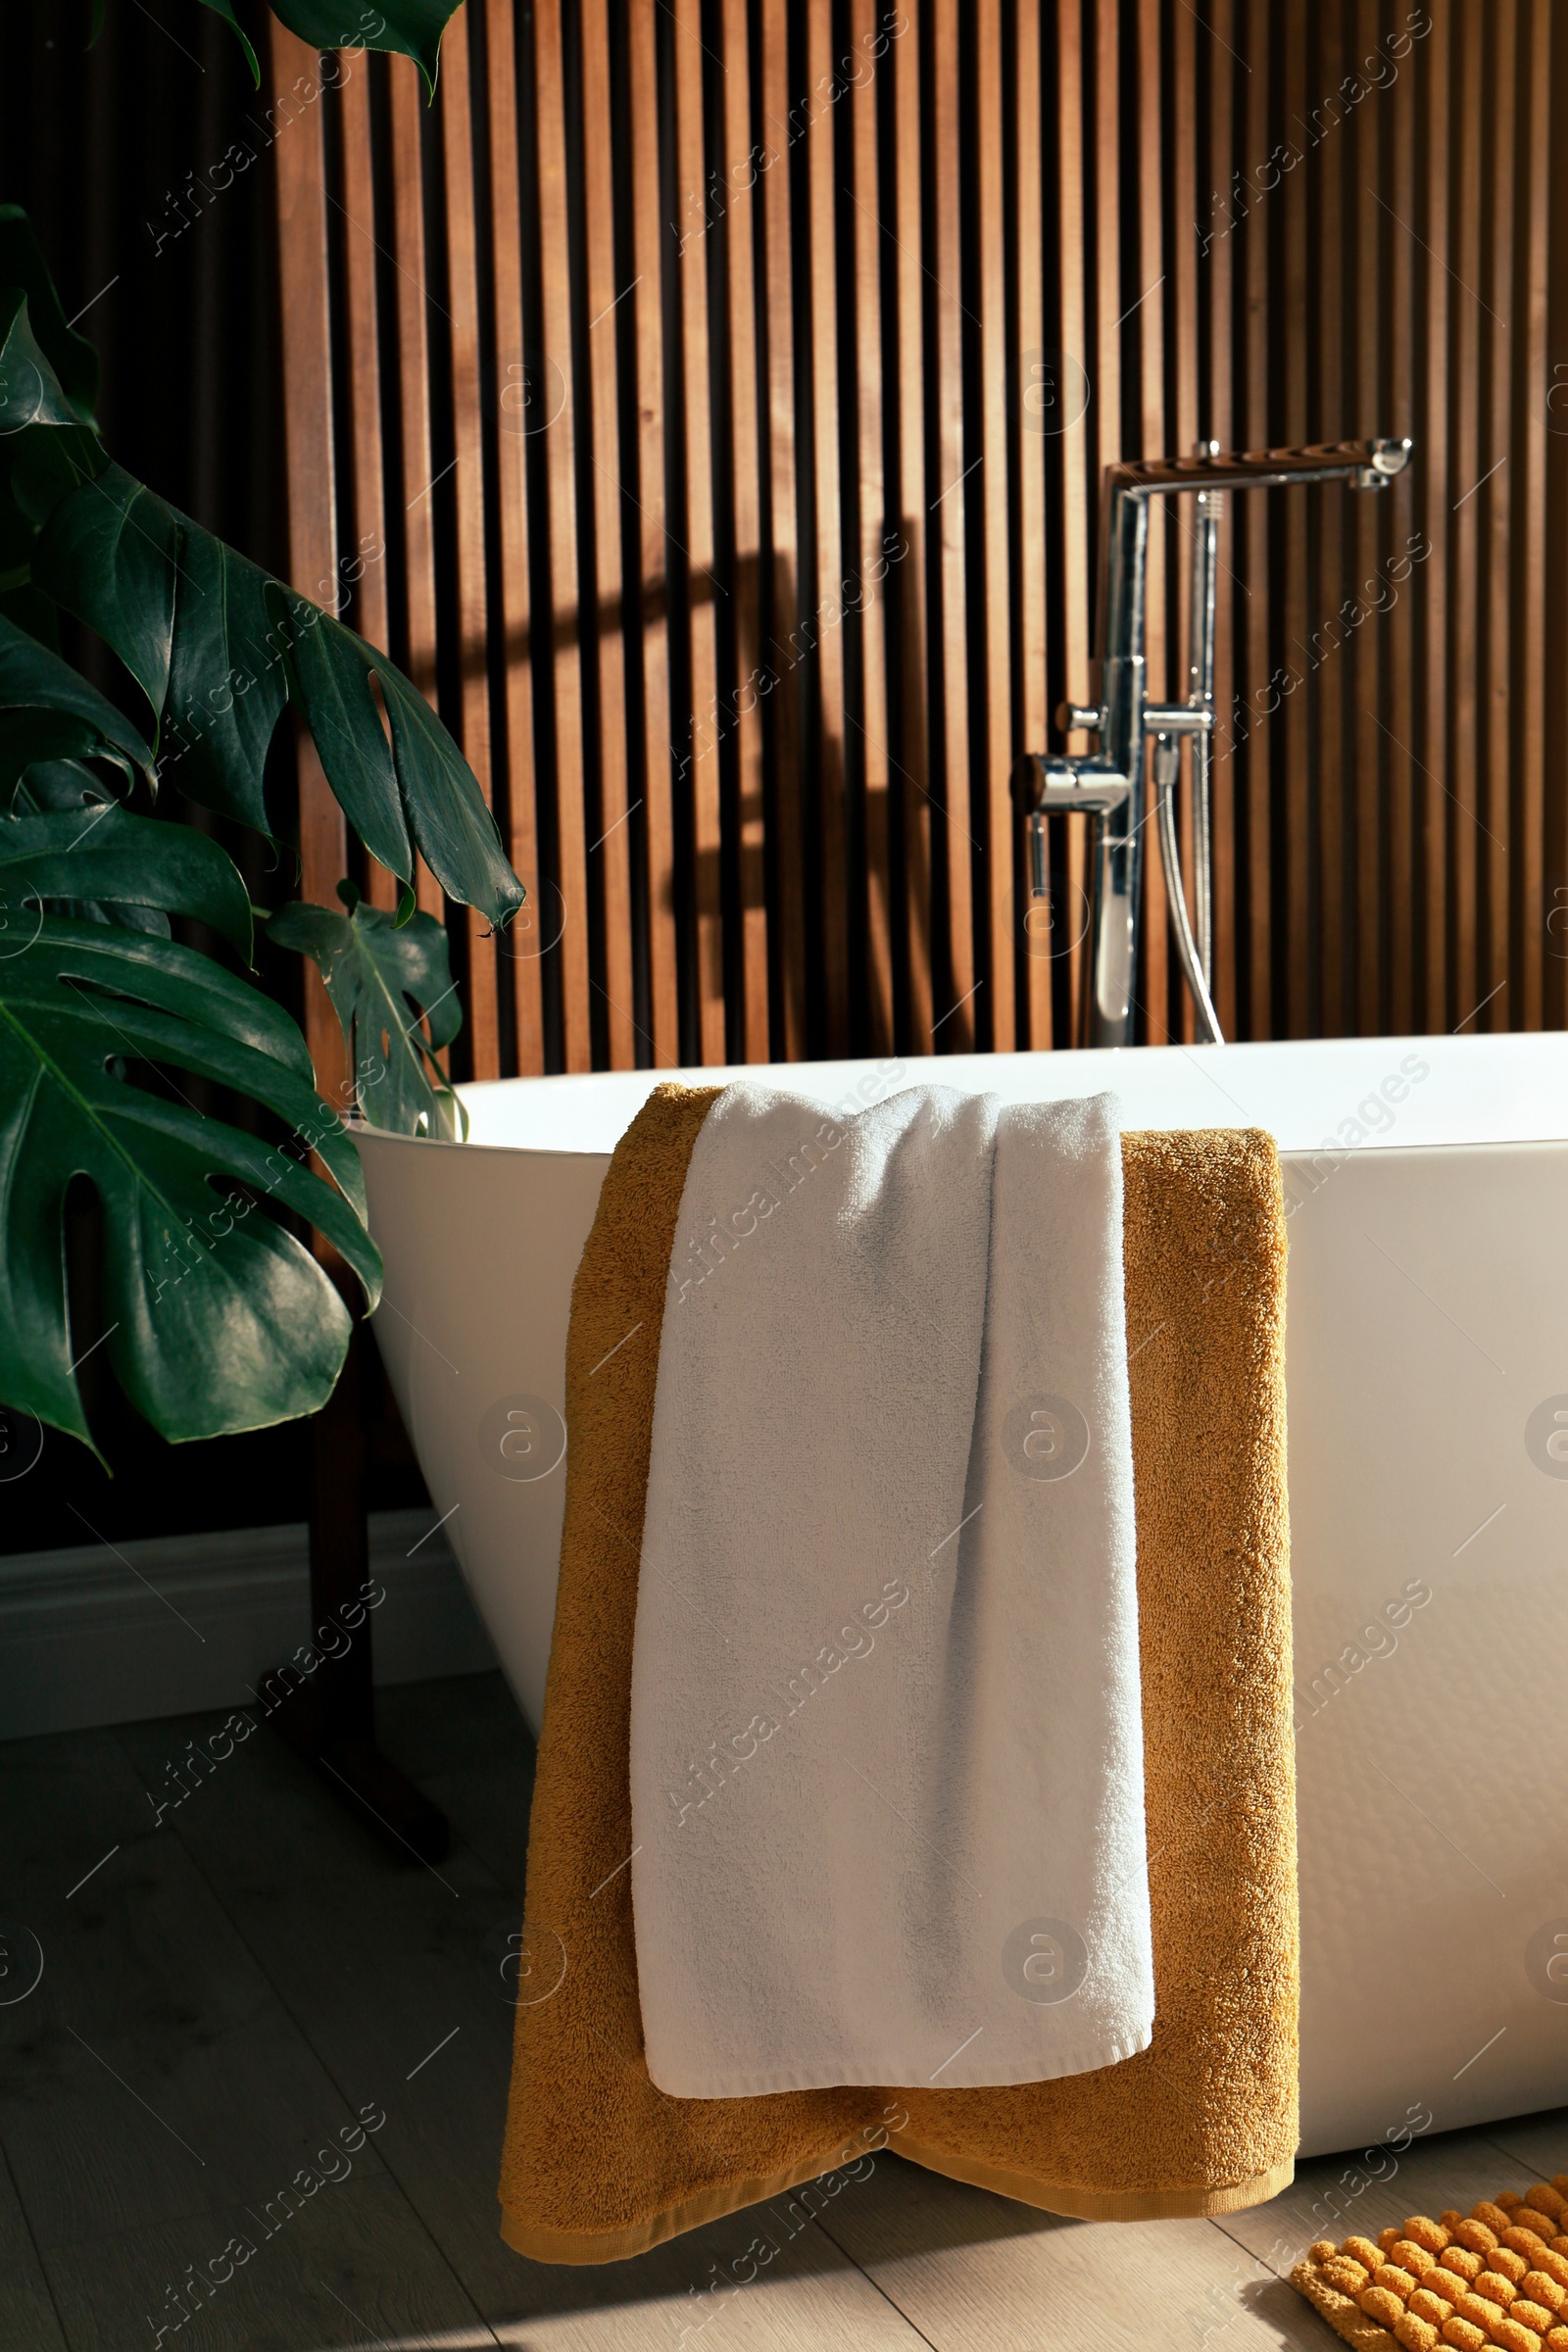 Photo of Cozy bathroom interior with stylish ceramic tub